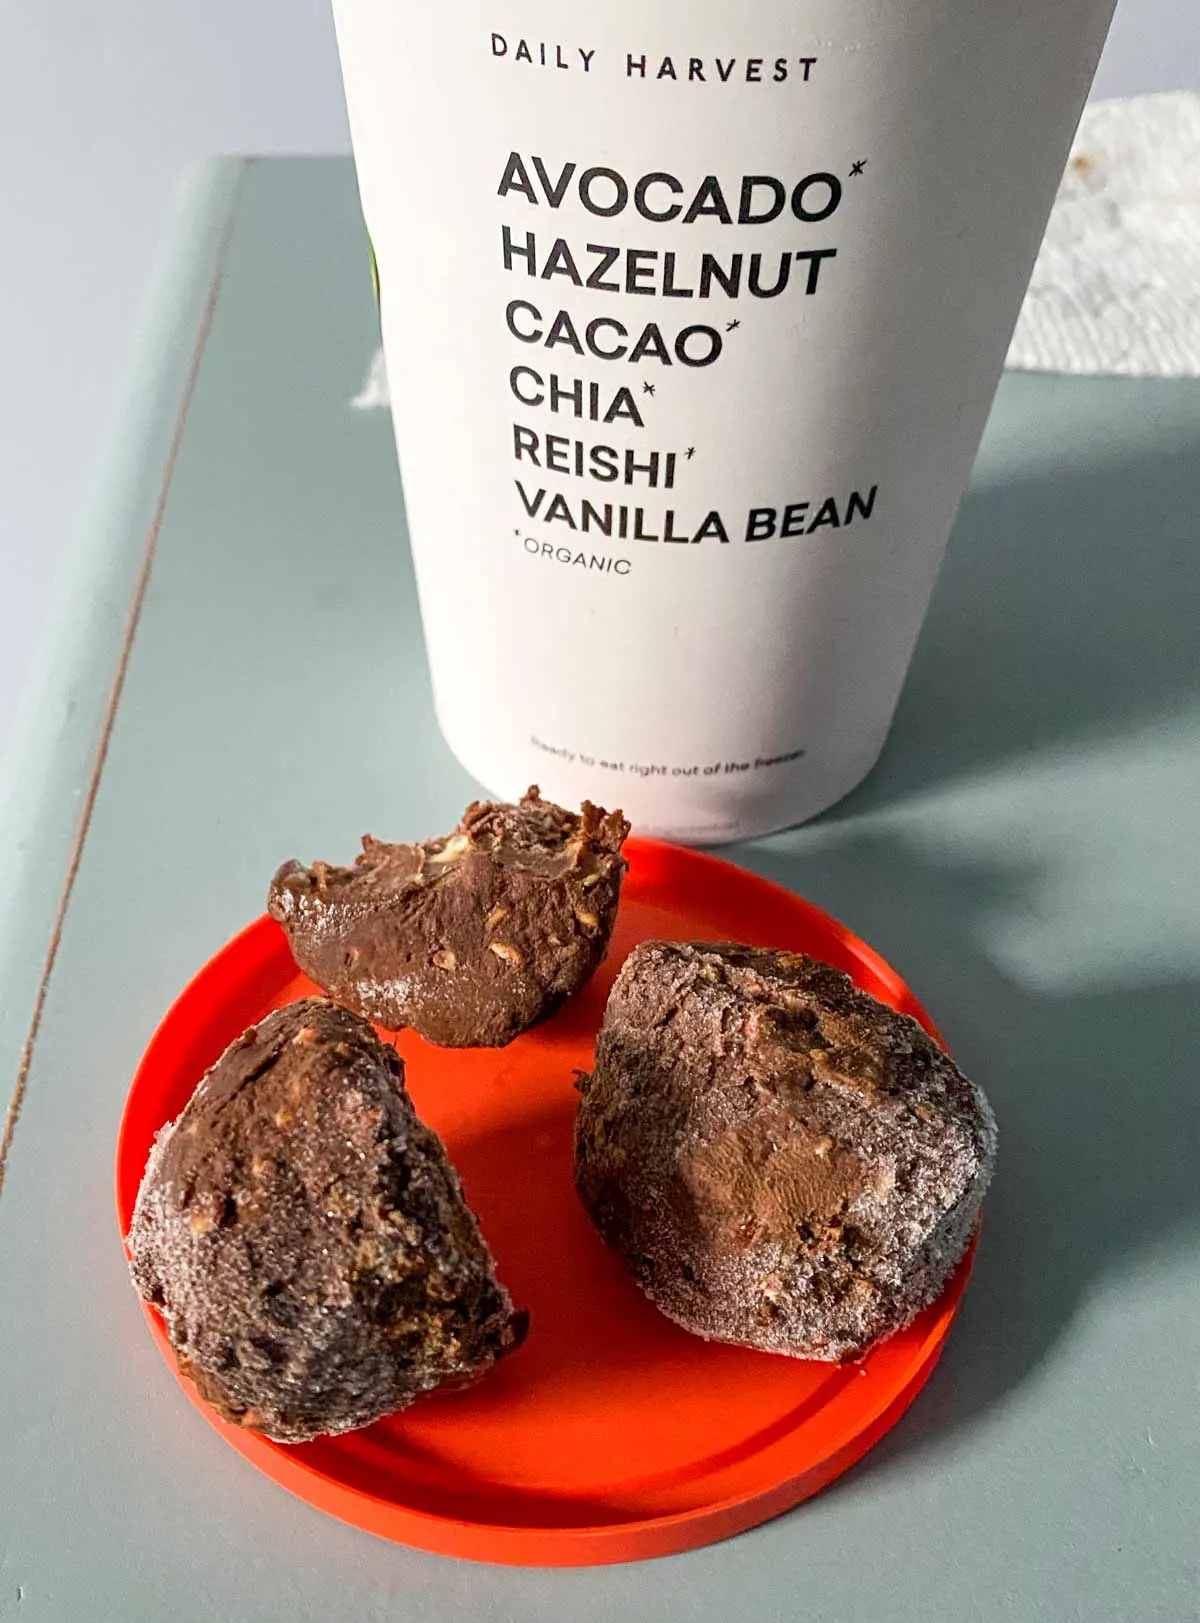 hazelnut cacao dessert bites from daily harvest